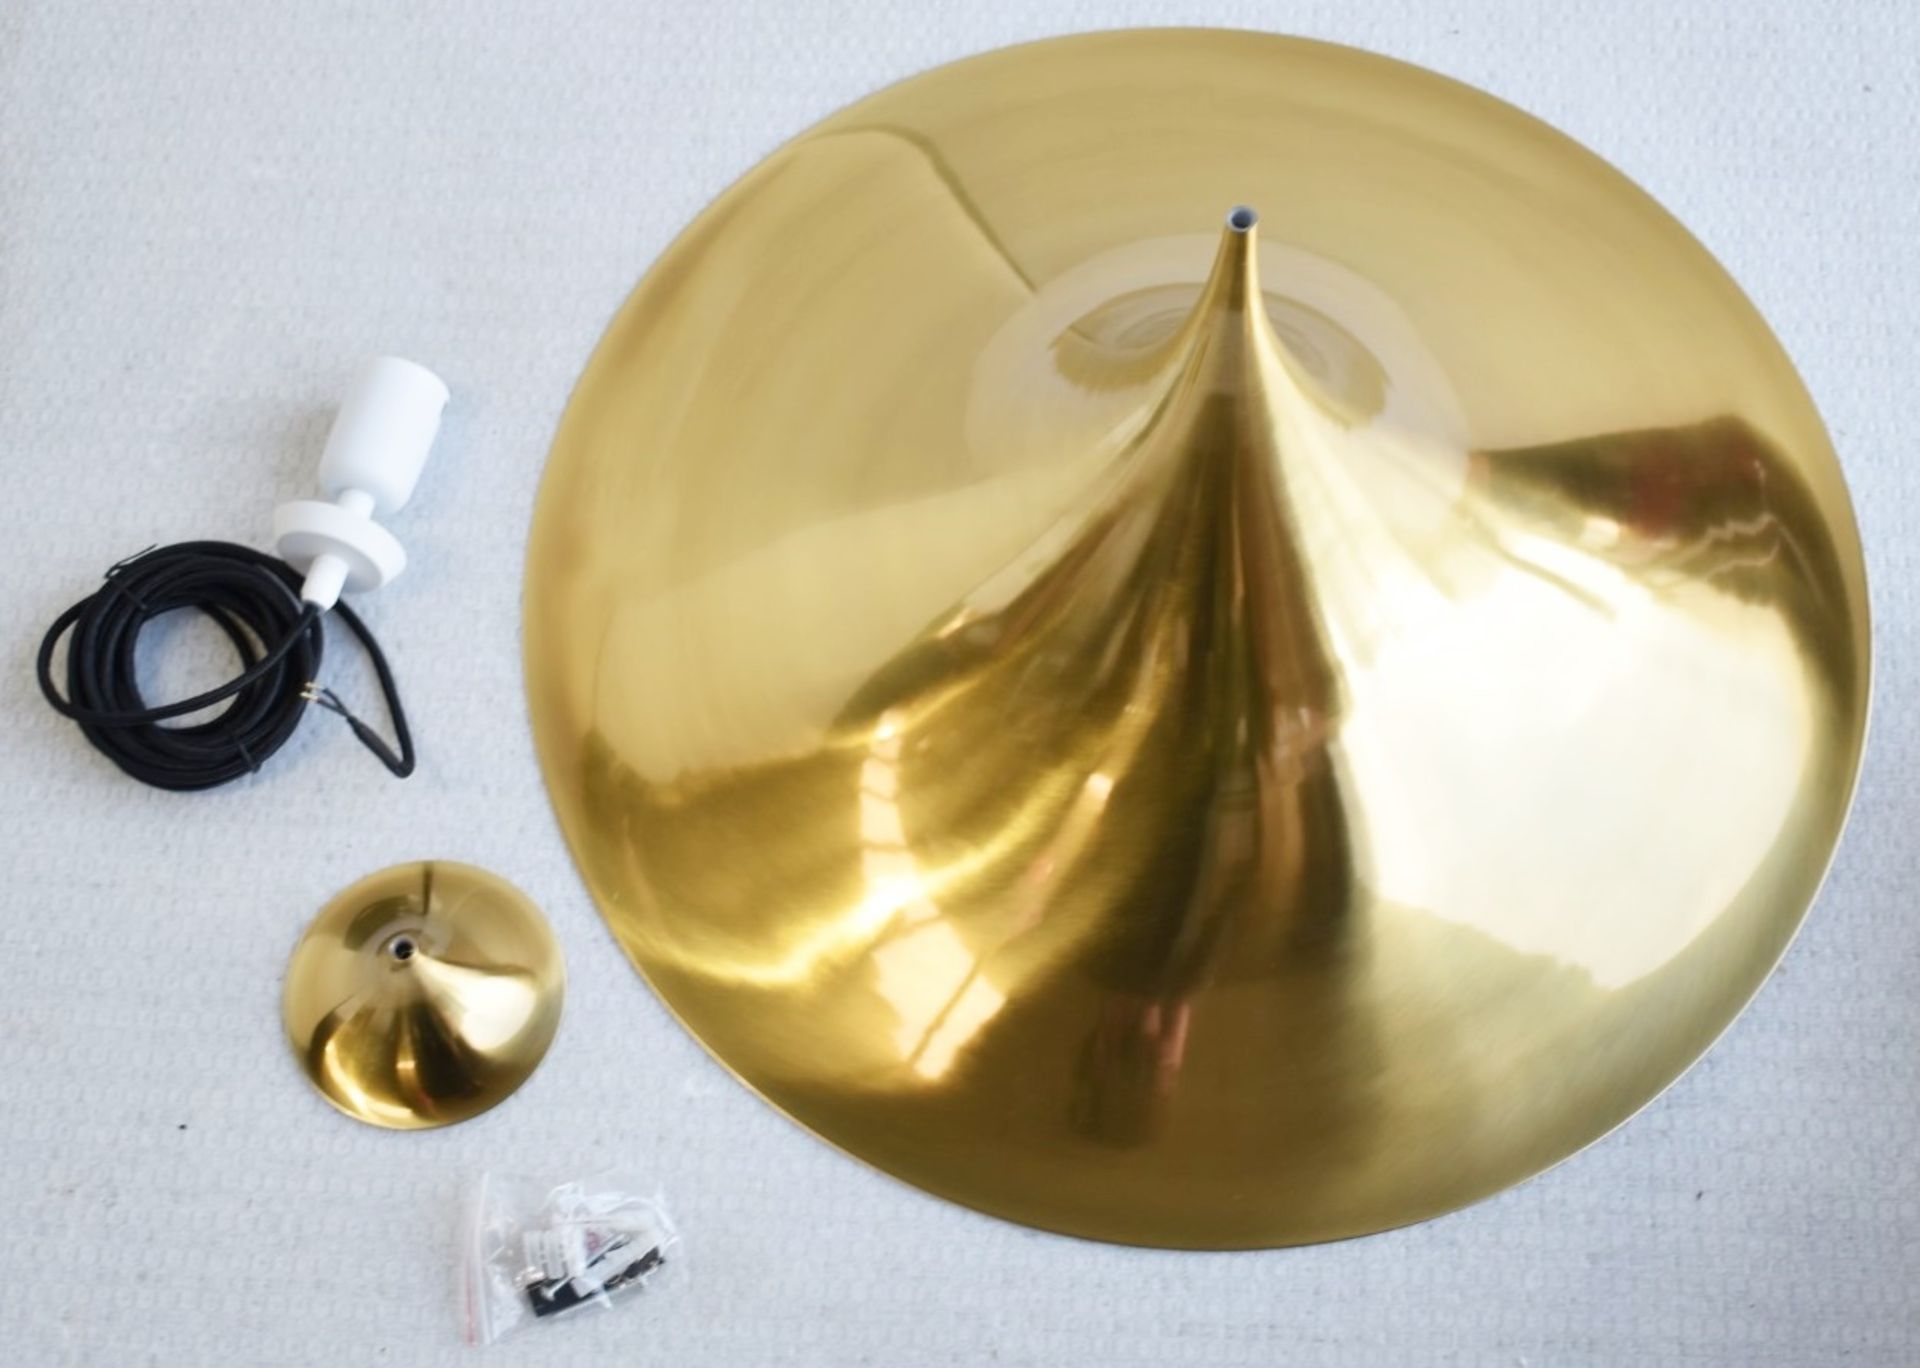 1 x GUBI 'Semi' Designer 60cm Metal Pendant Light Fitting in Polished Brass - Original Price £540.00 - Image 4 of 12